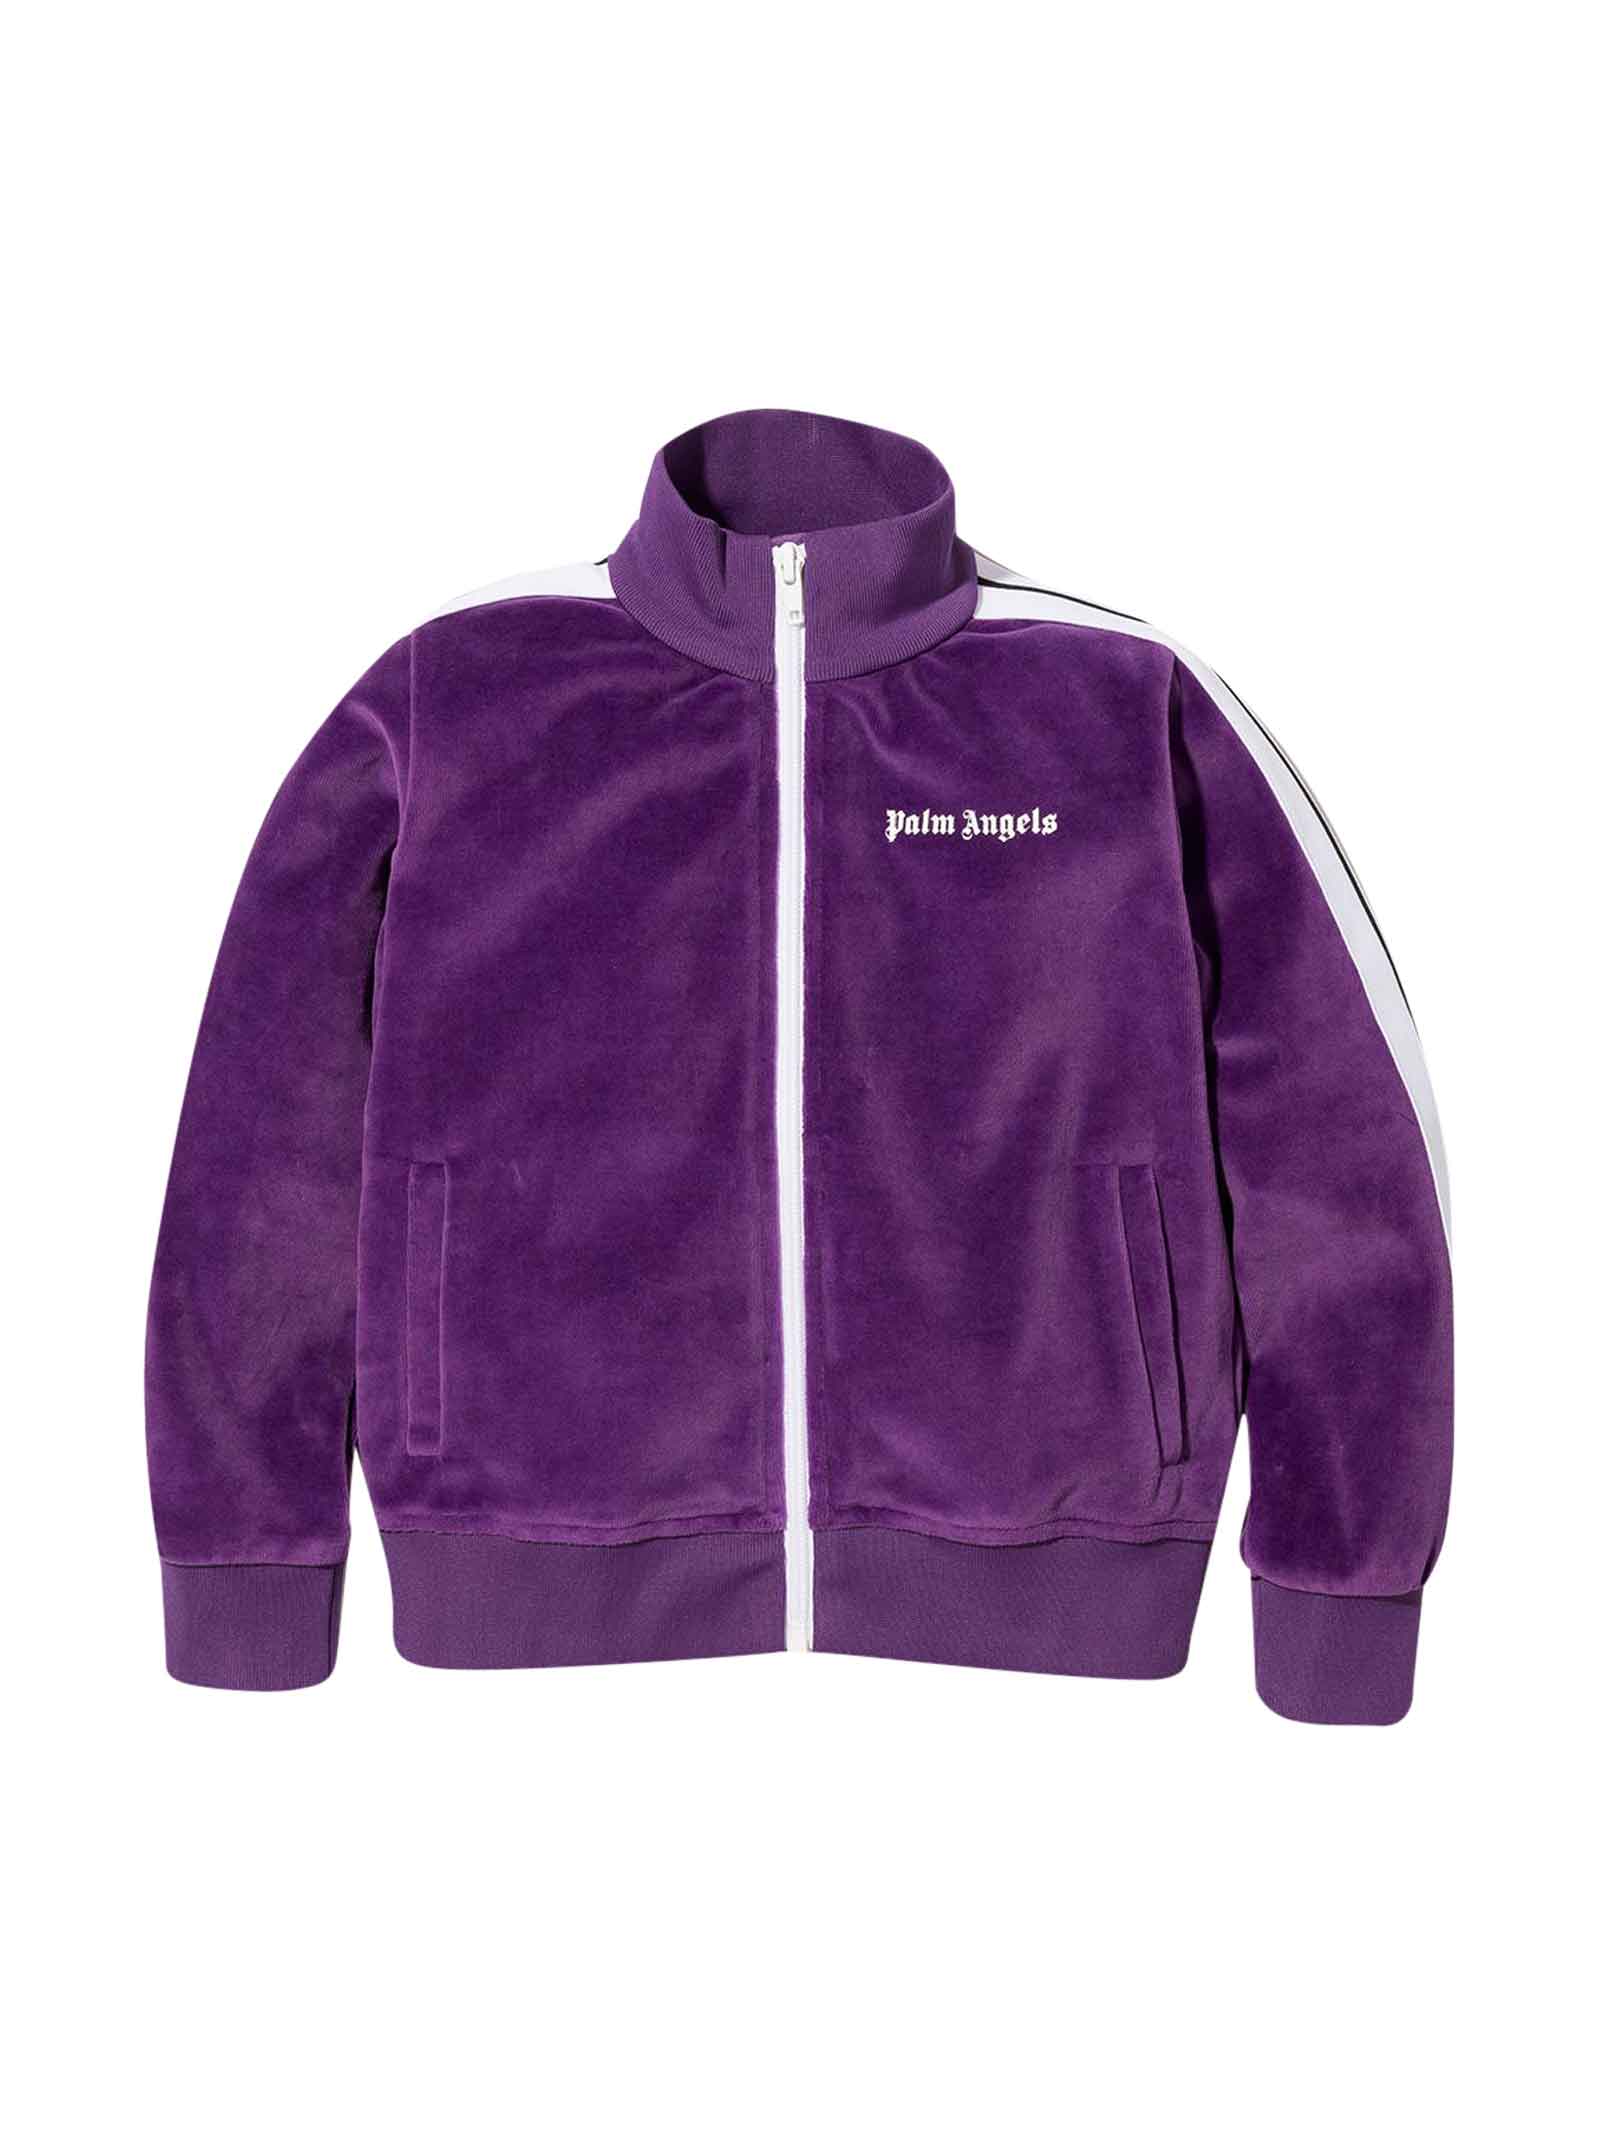 Palm Angels Purple Jacket